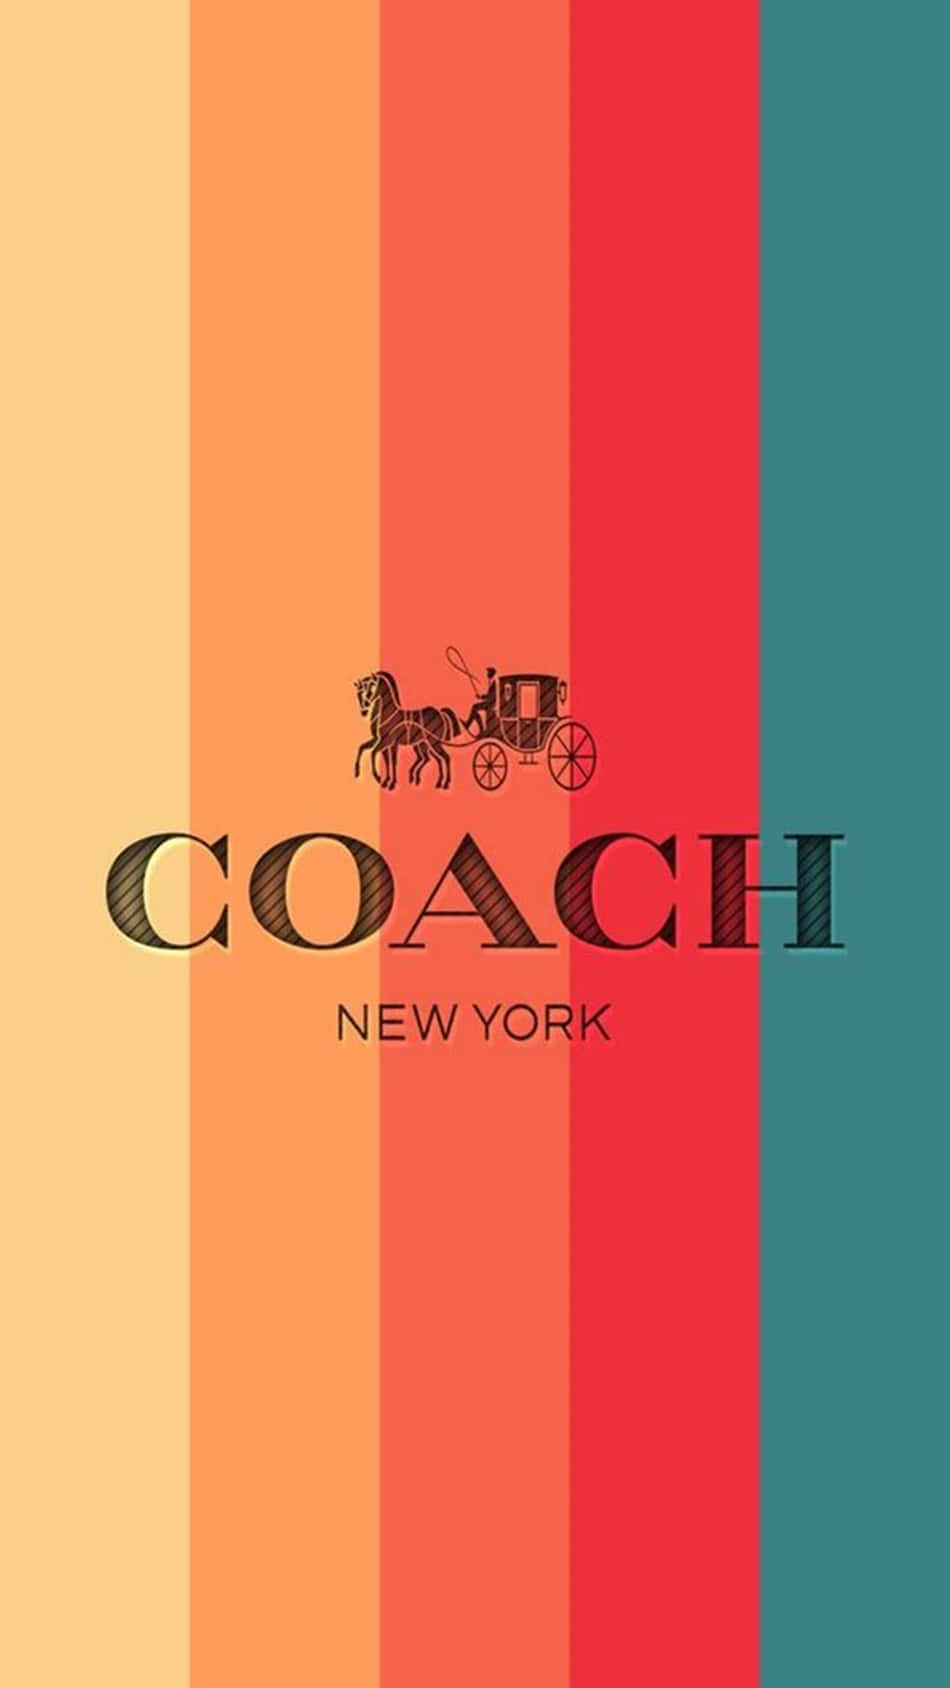 Luxury Aesthetic Coach New York Wallpaper